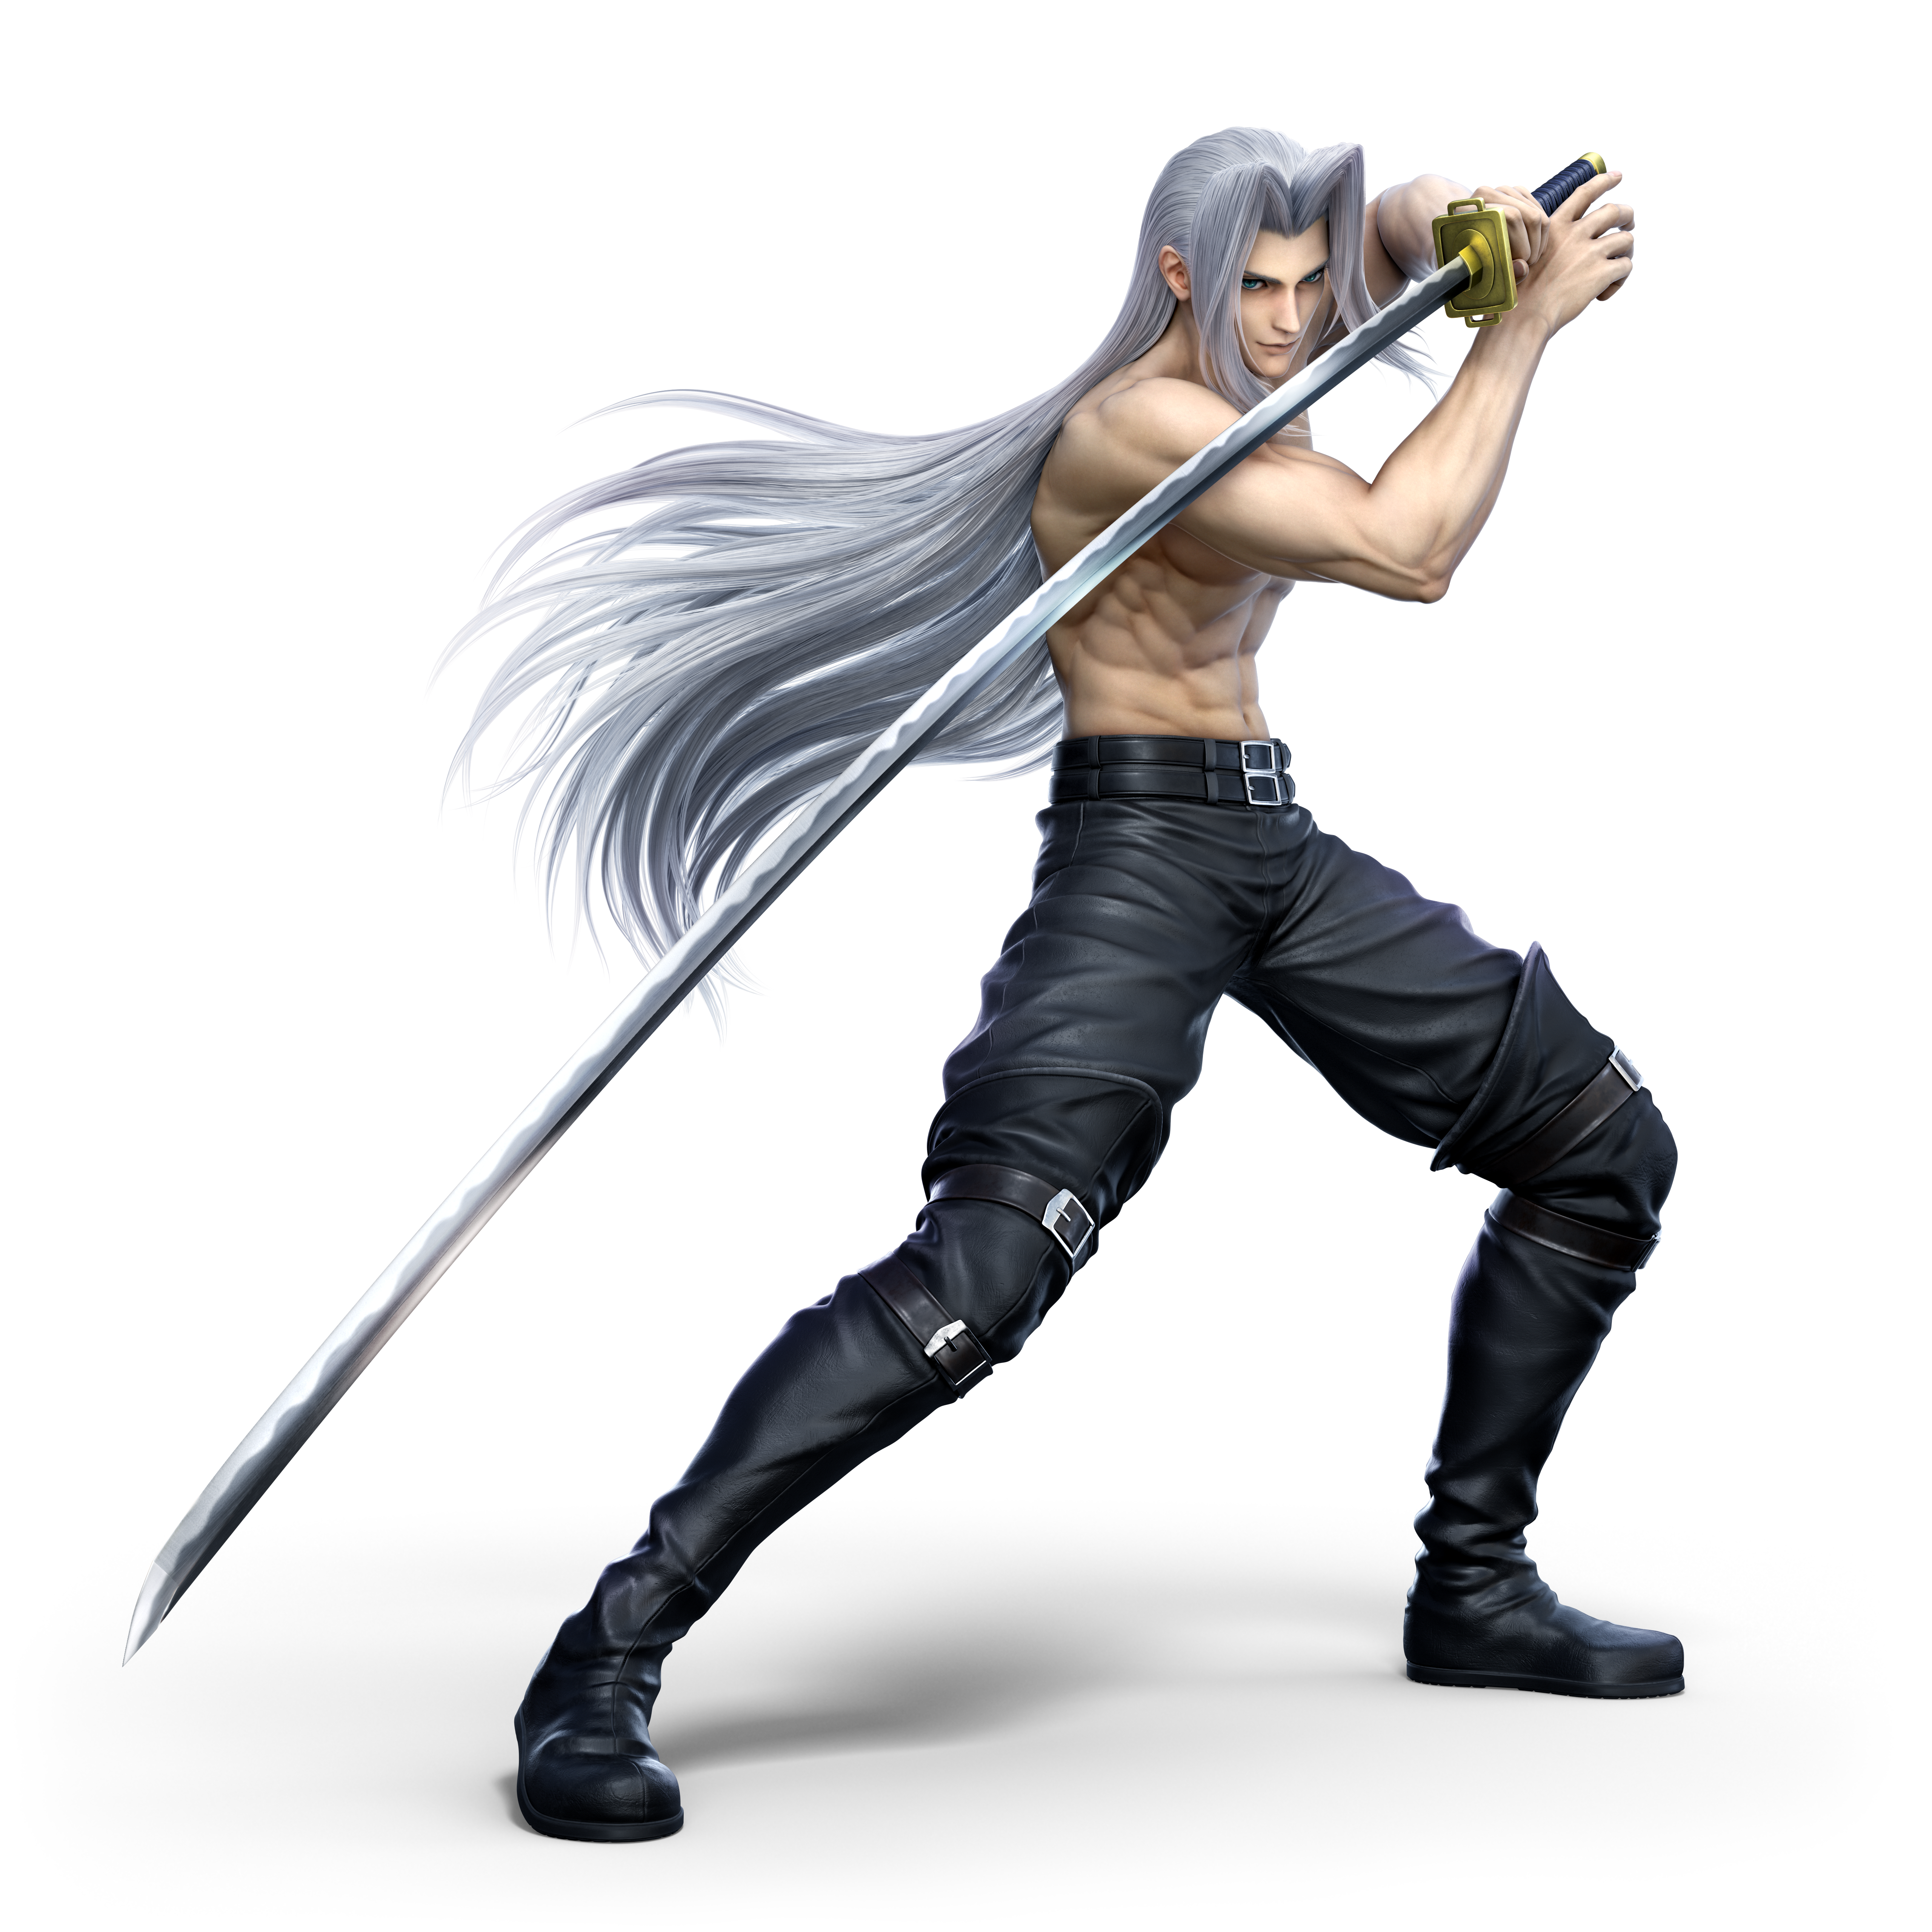 Shirtless Sephiroth Render From Super Smash Bros. Ultimate